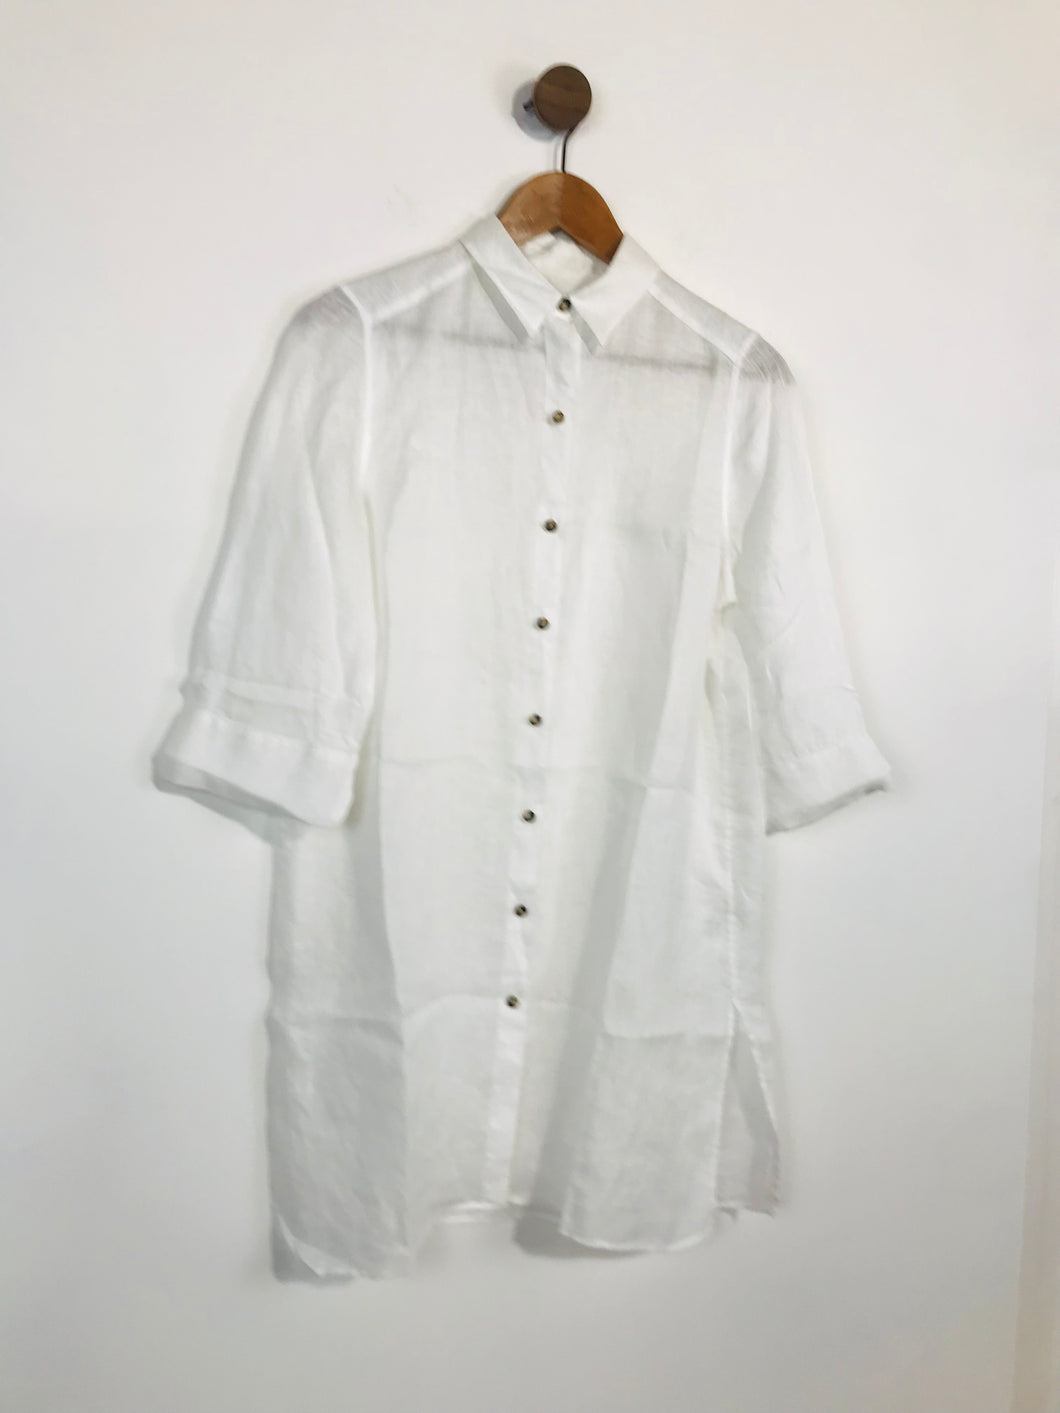 El Corte Ingles Women's Linen Lightweight Button-Up Shirt | XS UK6-8 | White